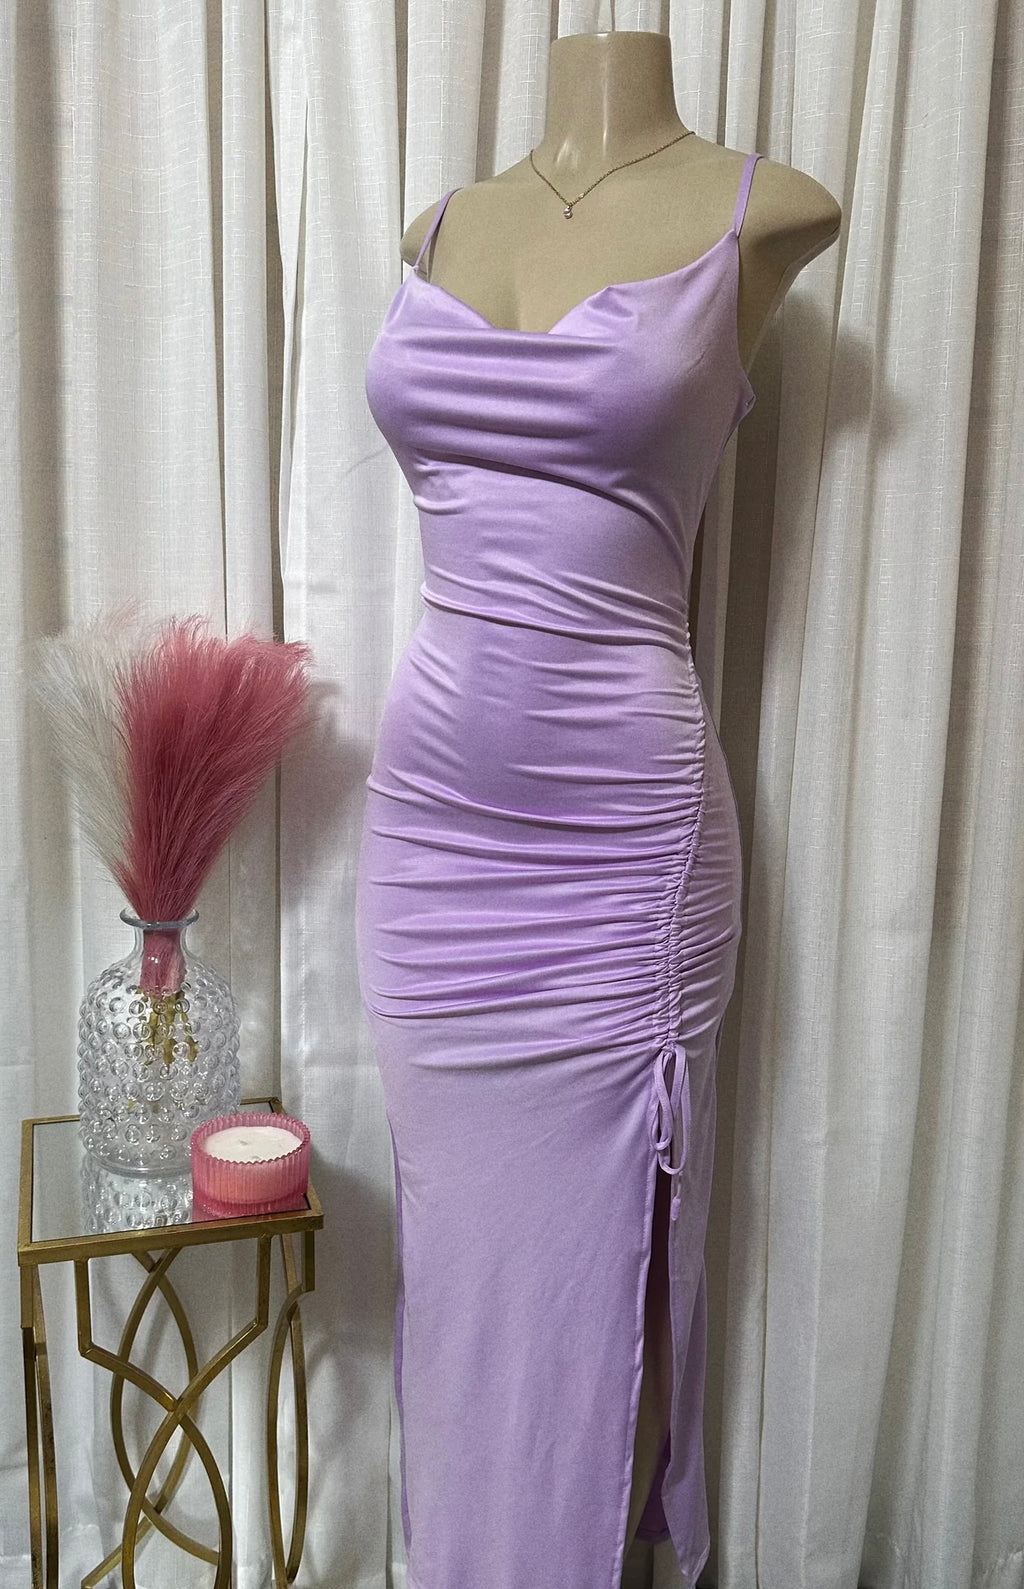 The “Lilac Queen” Maxi Dress